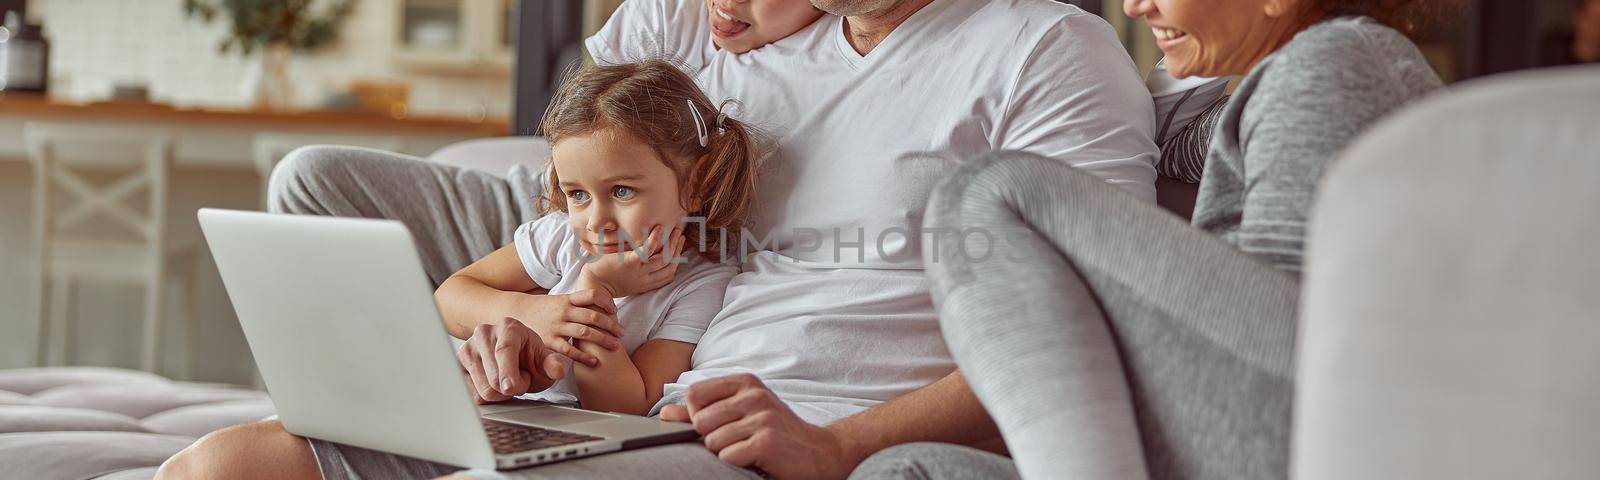 Joyful family watching video on notebook on couch by Yaroslav_astakhov